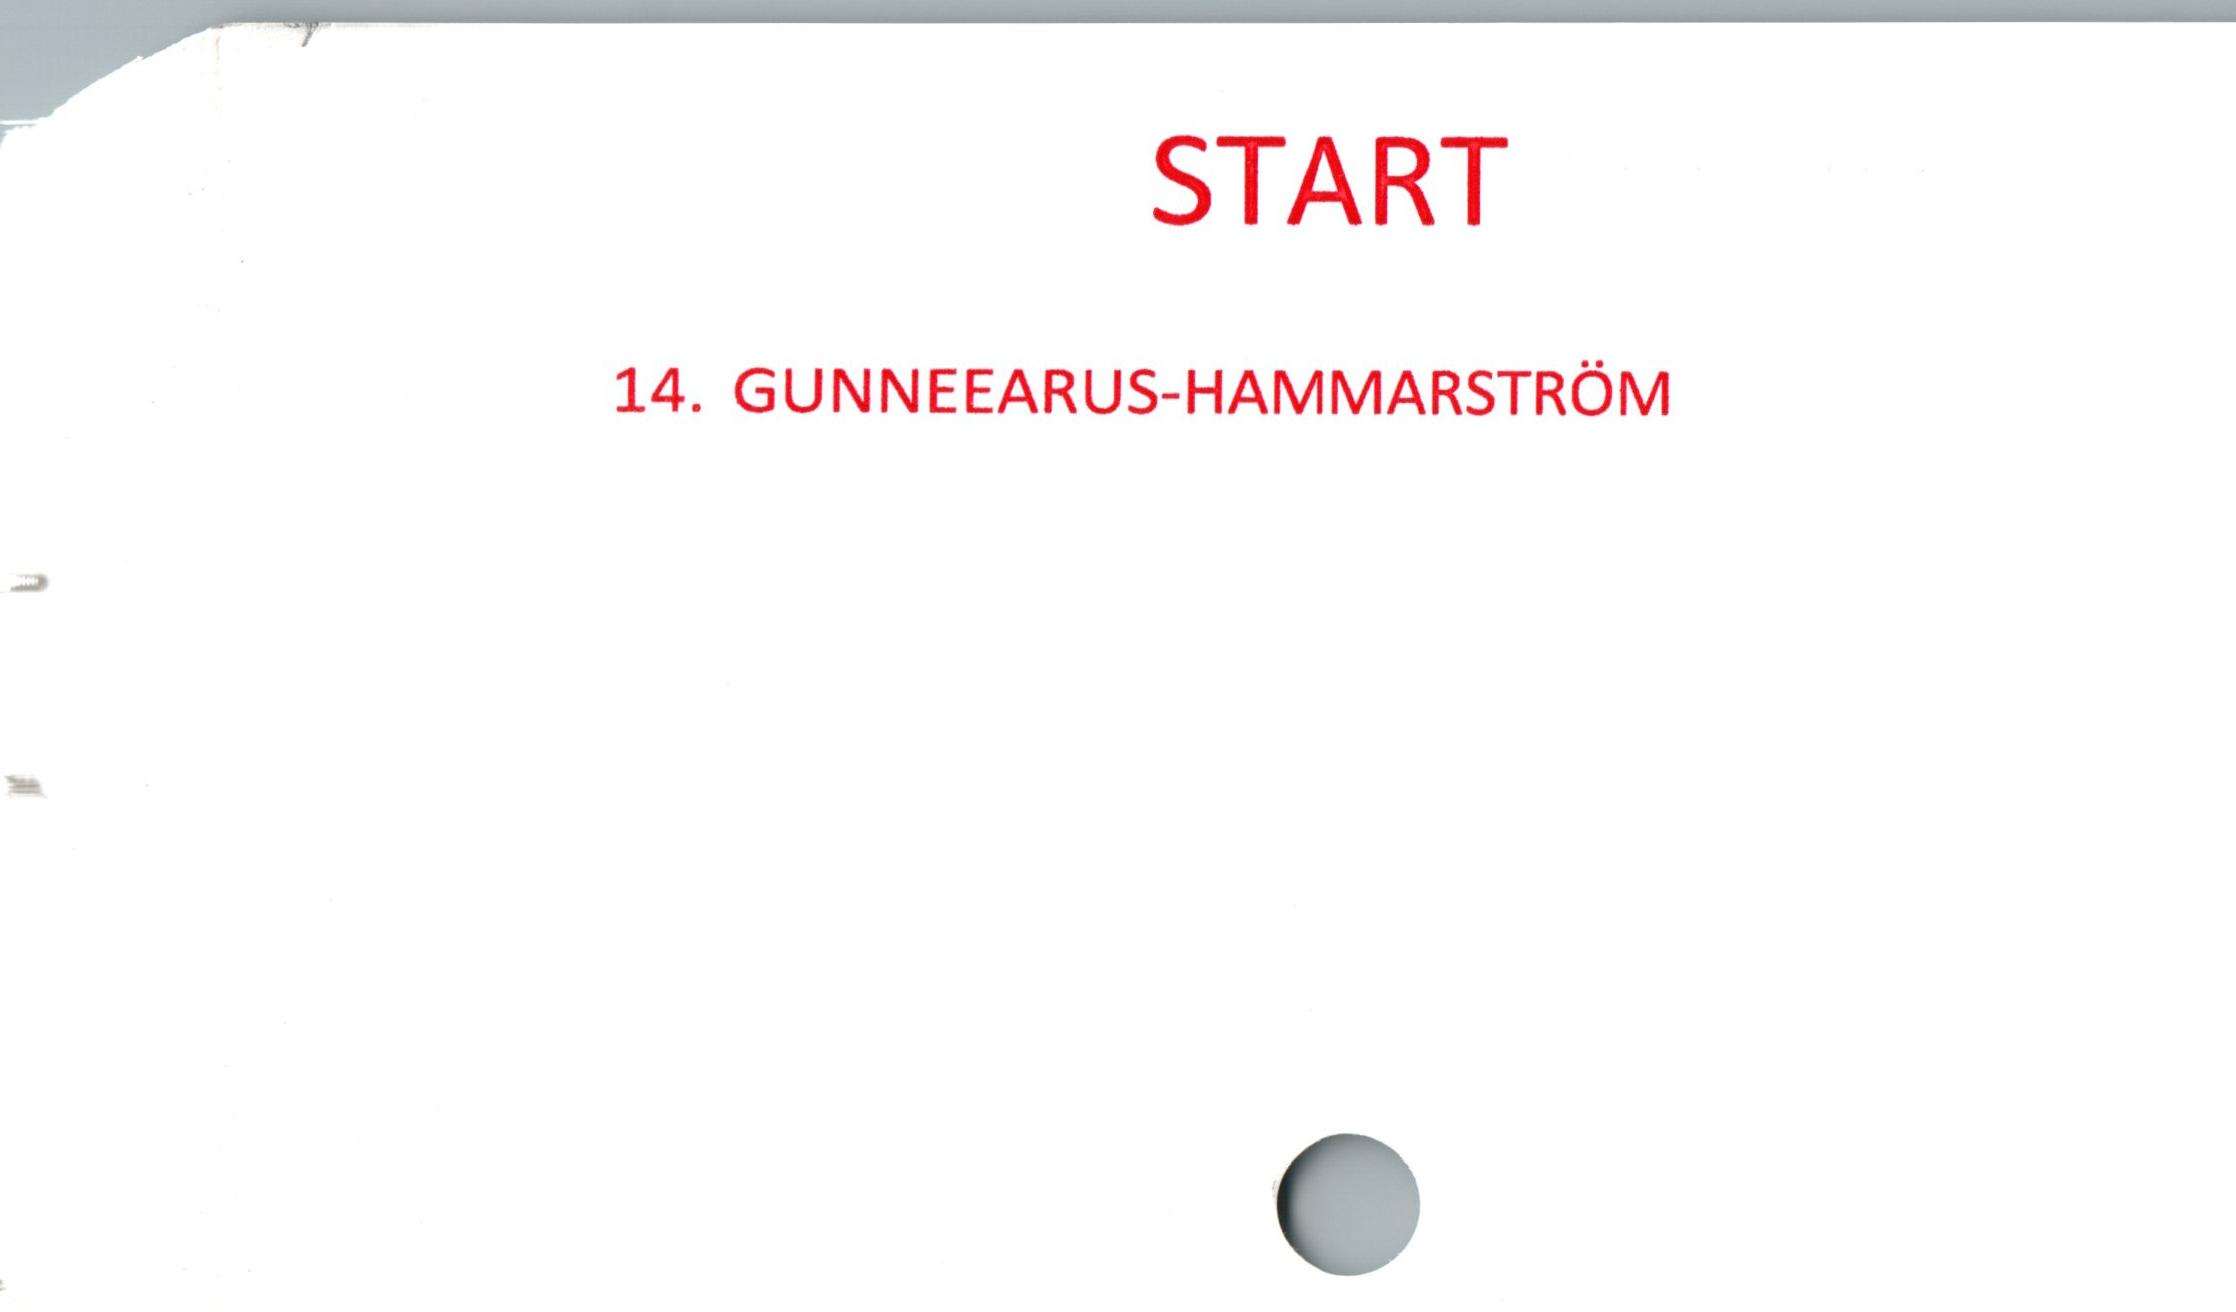 GUNNEEARUS-HAMMARSTRÖM ﻿START

14. GUNNEEARUS-HAMMARSTRÖM